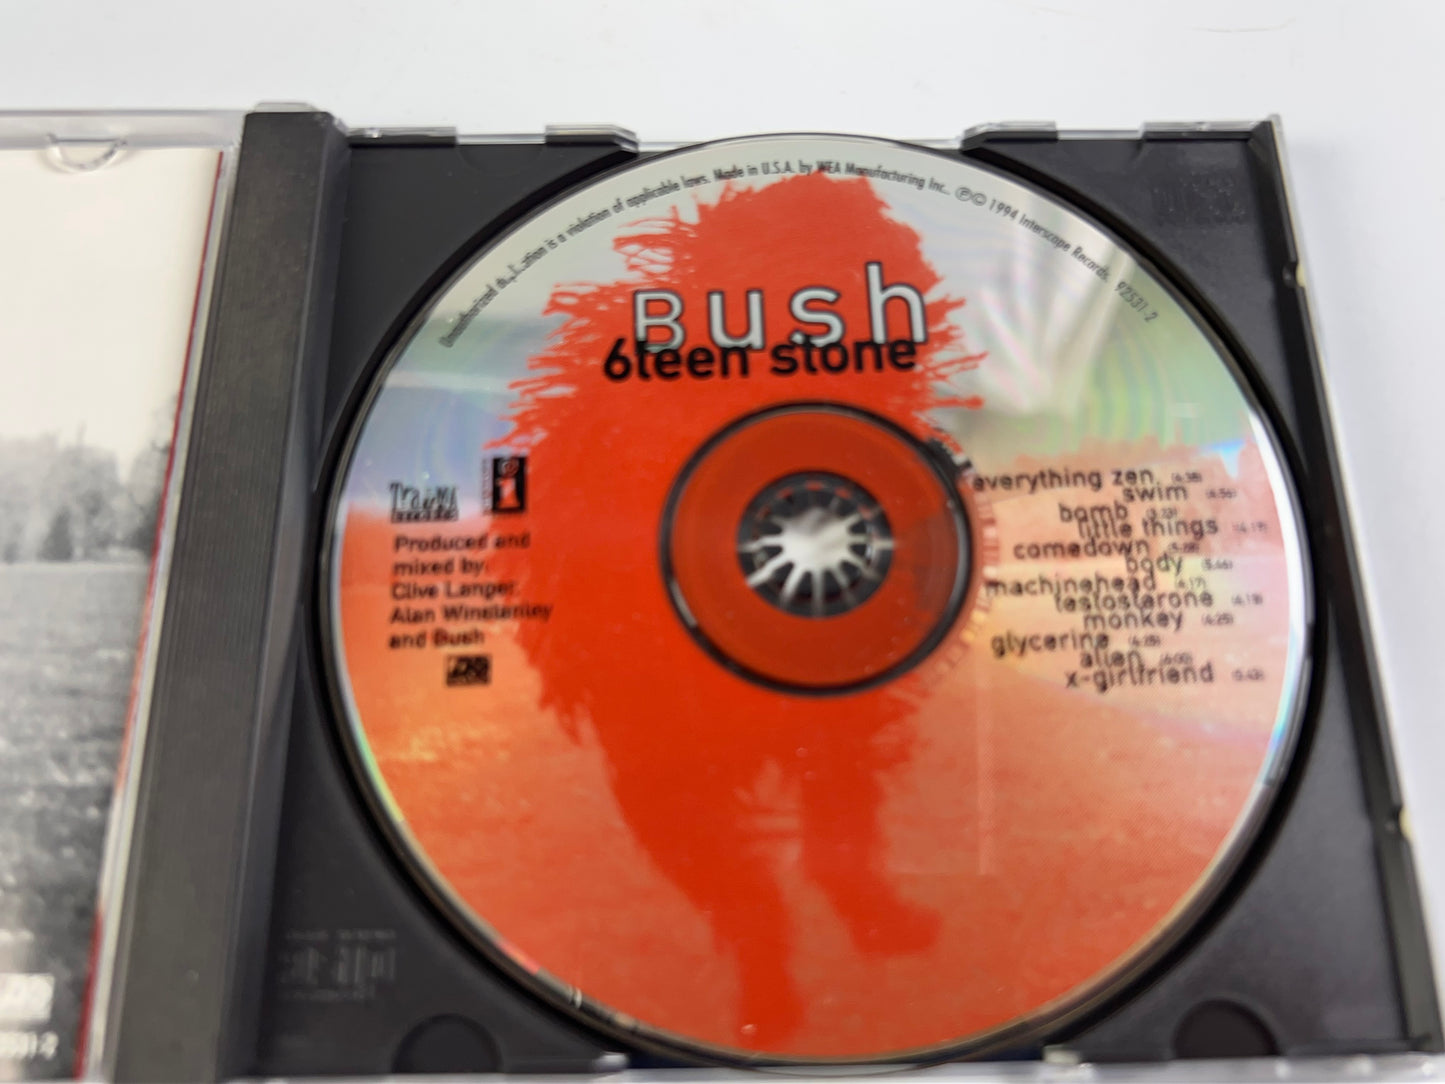 Sixteen Stone - Music CD - Bush - 1994